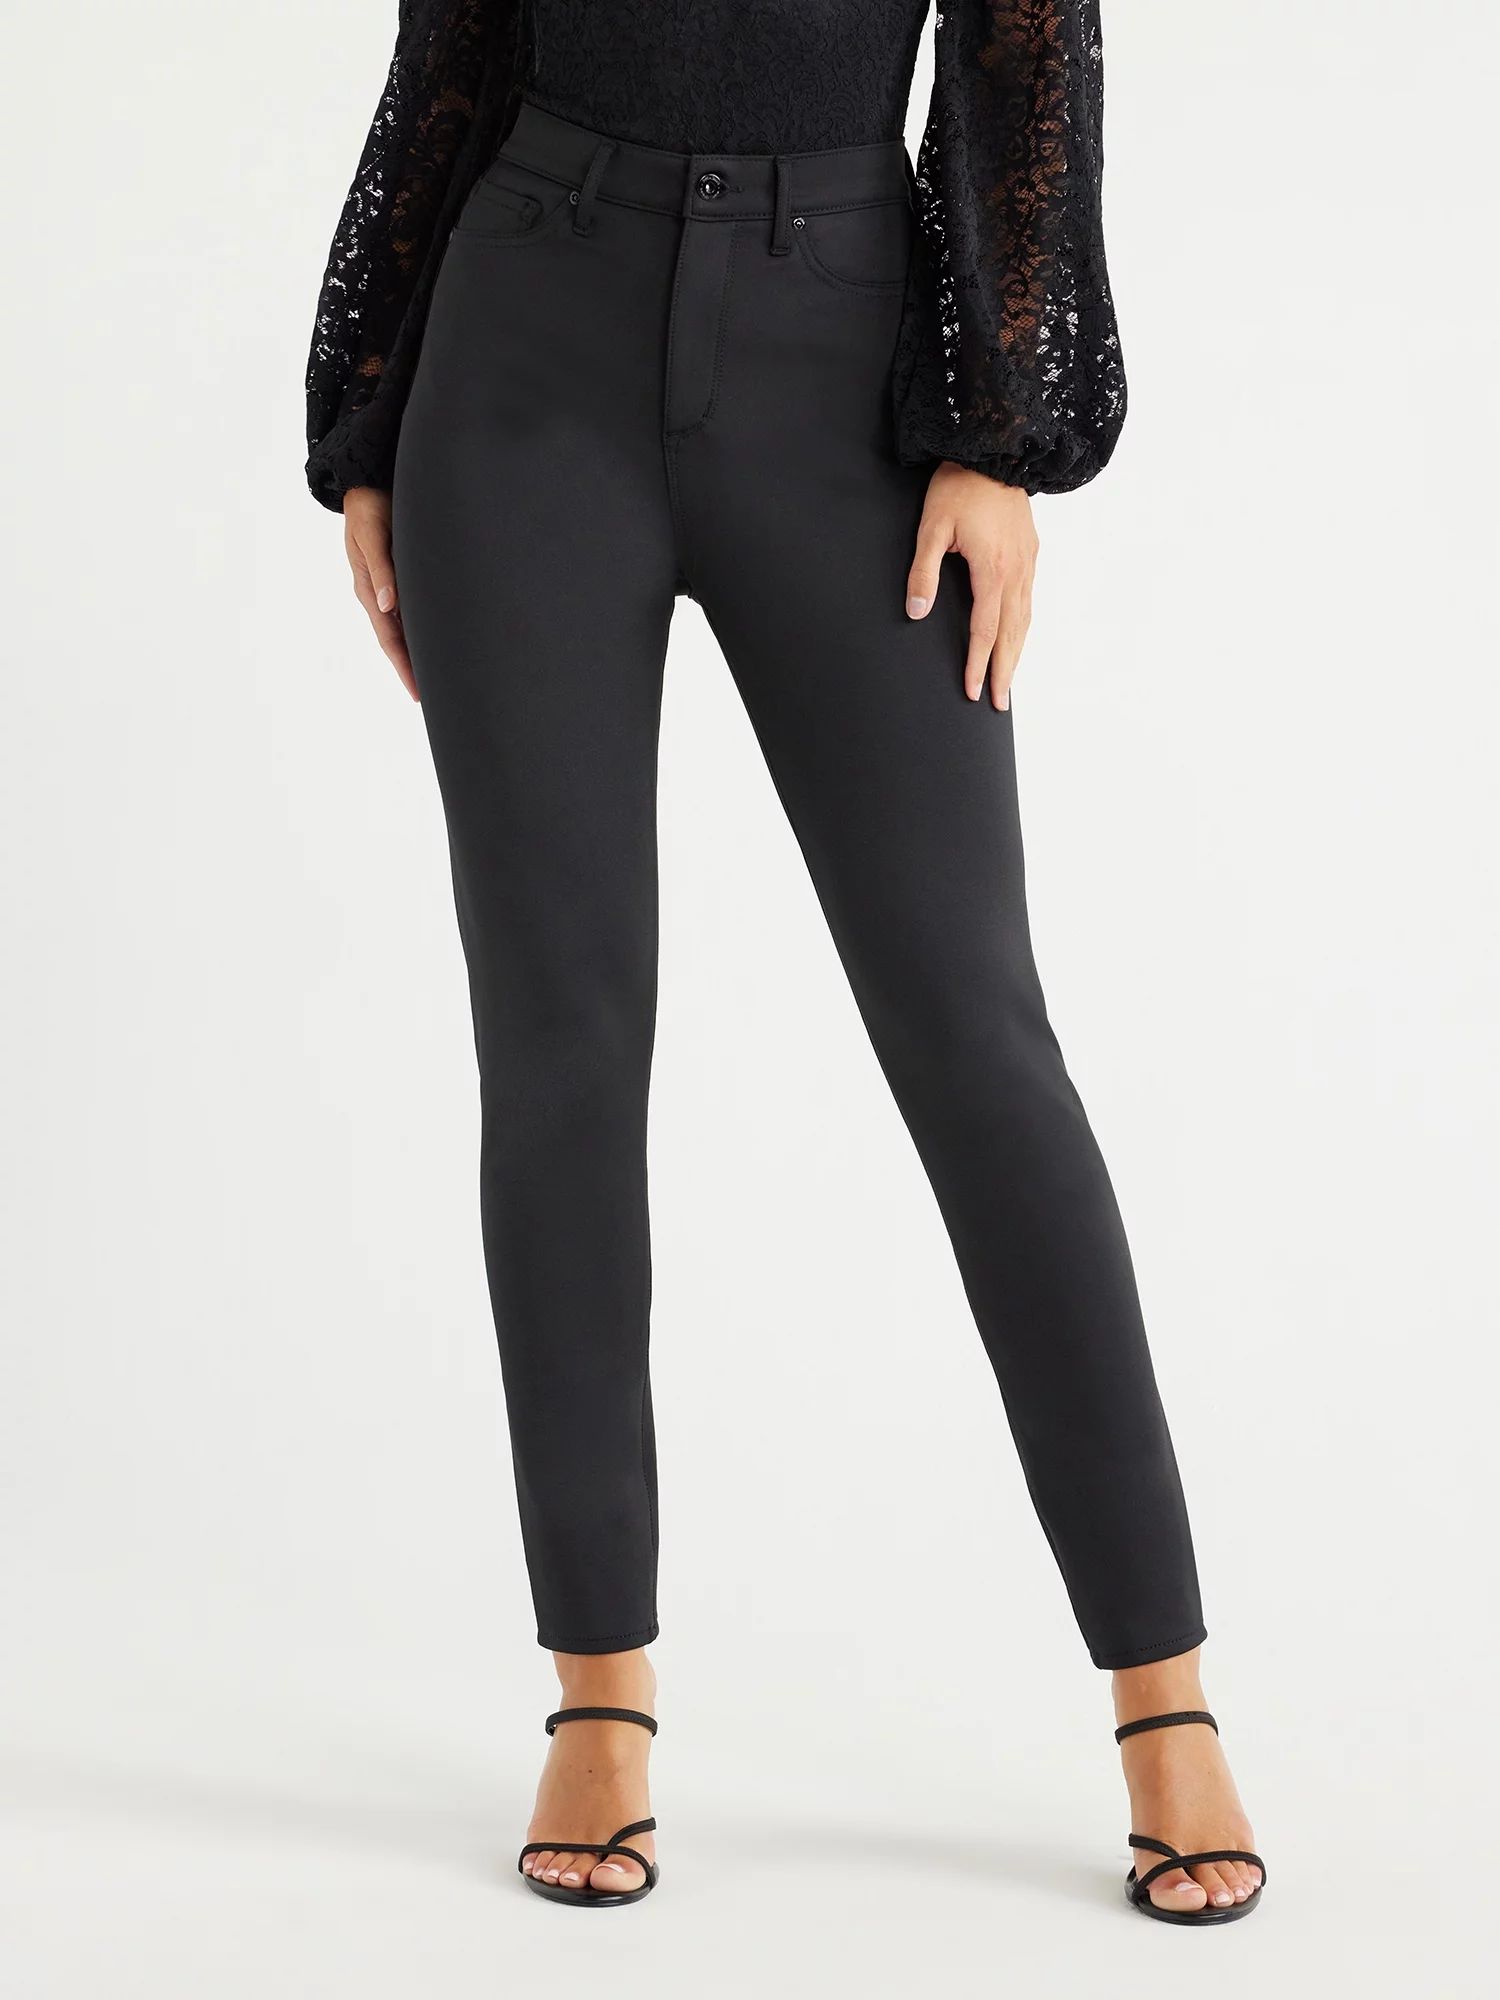 Sofia Jeans Women's Scuba Skinny Pants, 27" Inseam, Sizes 2-20 | Walmart (US)